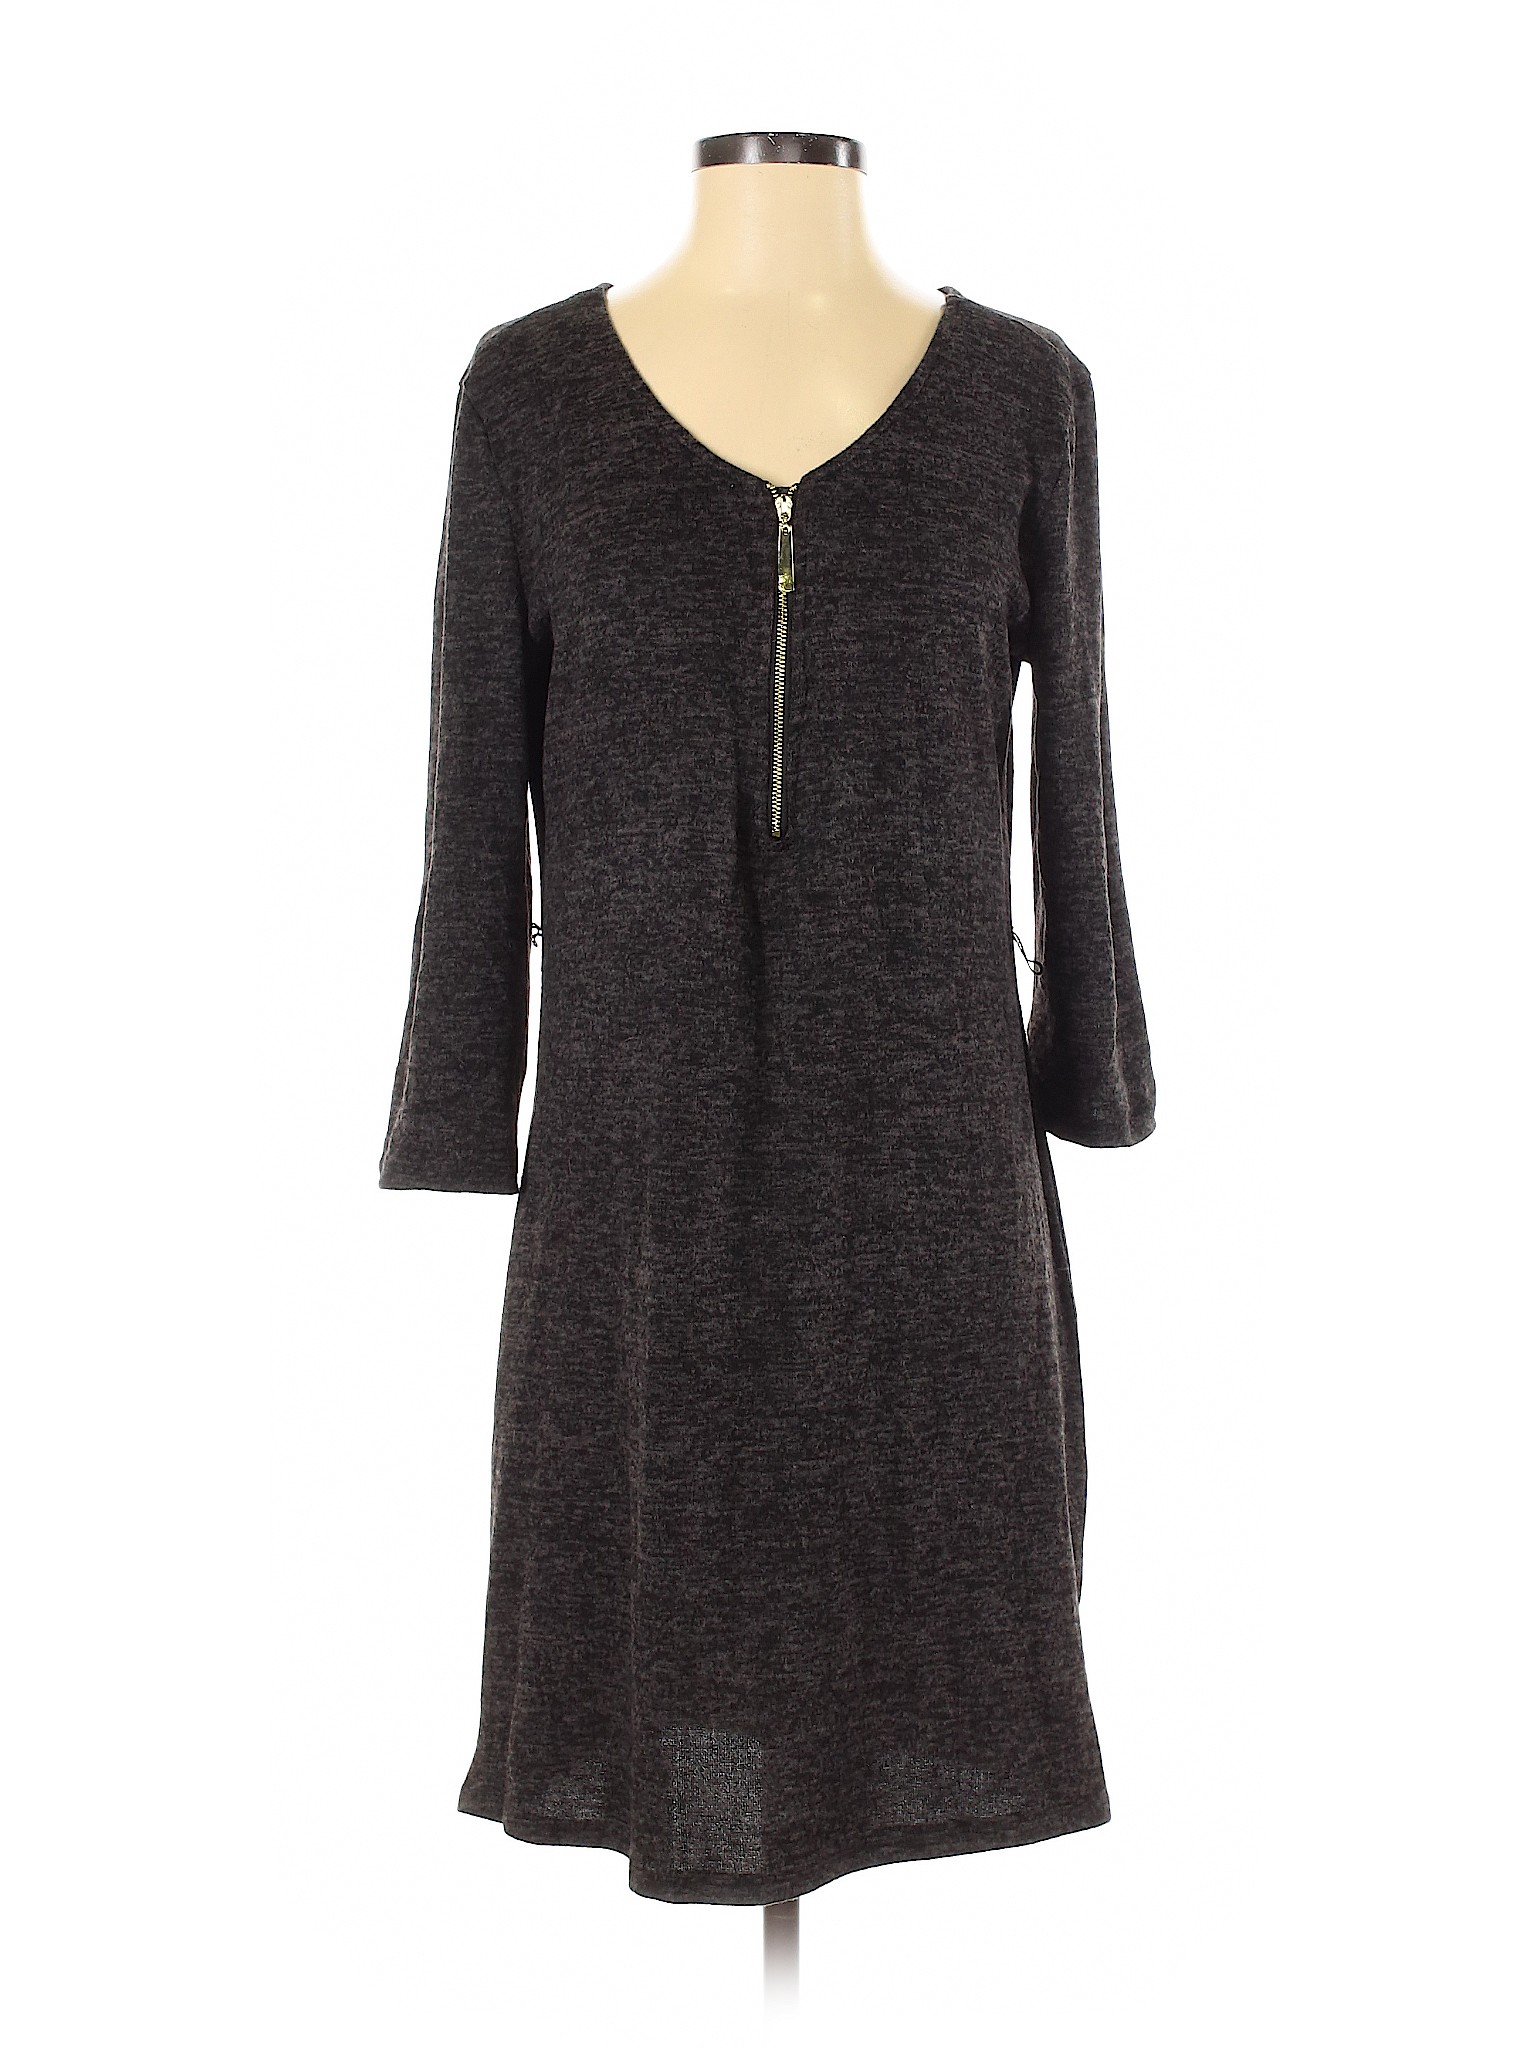 Tacera Women Black Casual Dress S | eBay